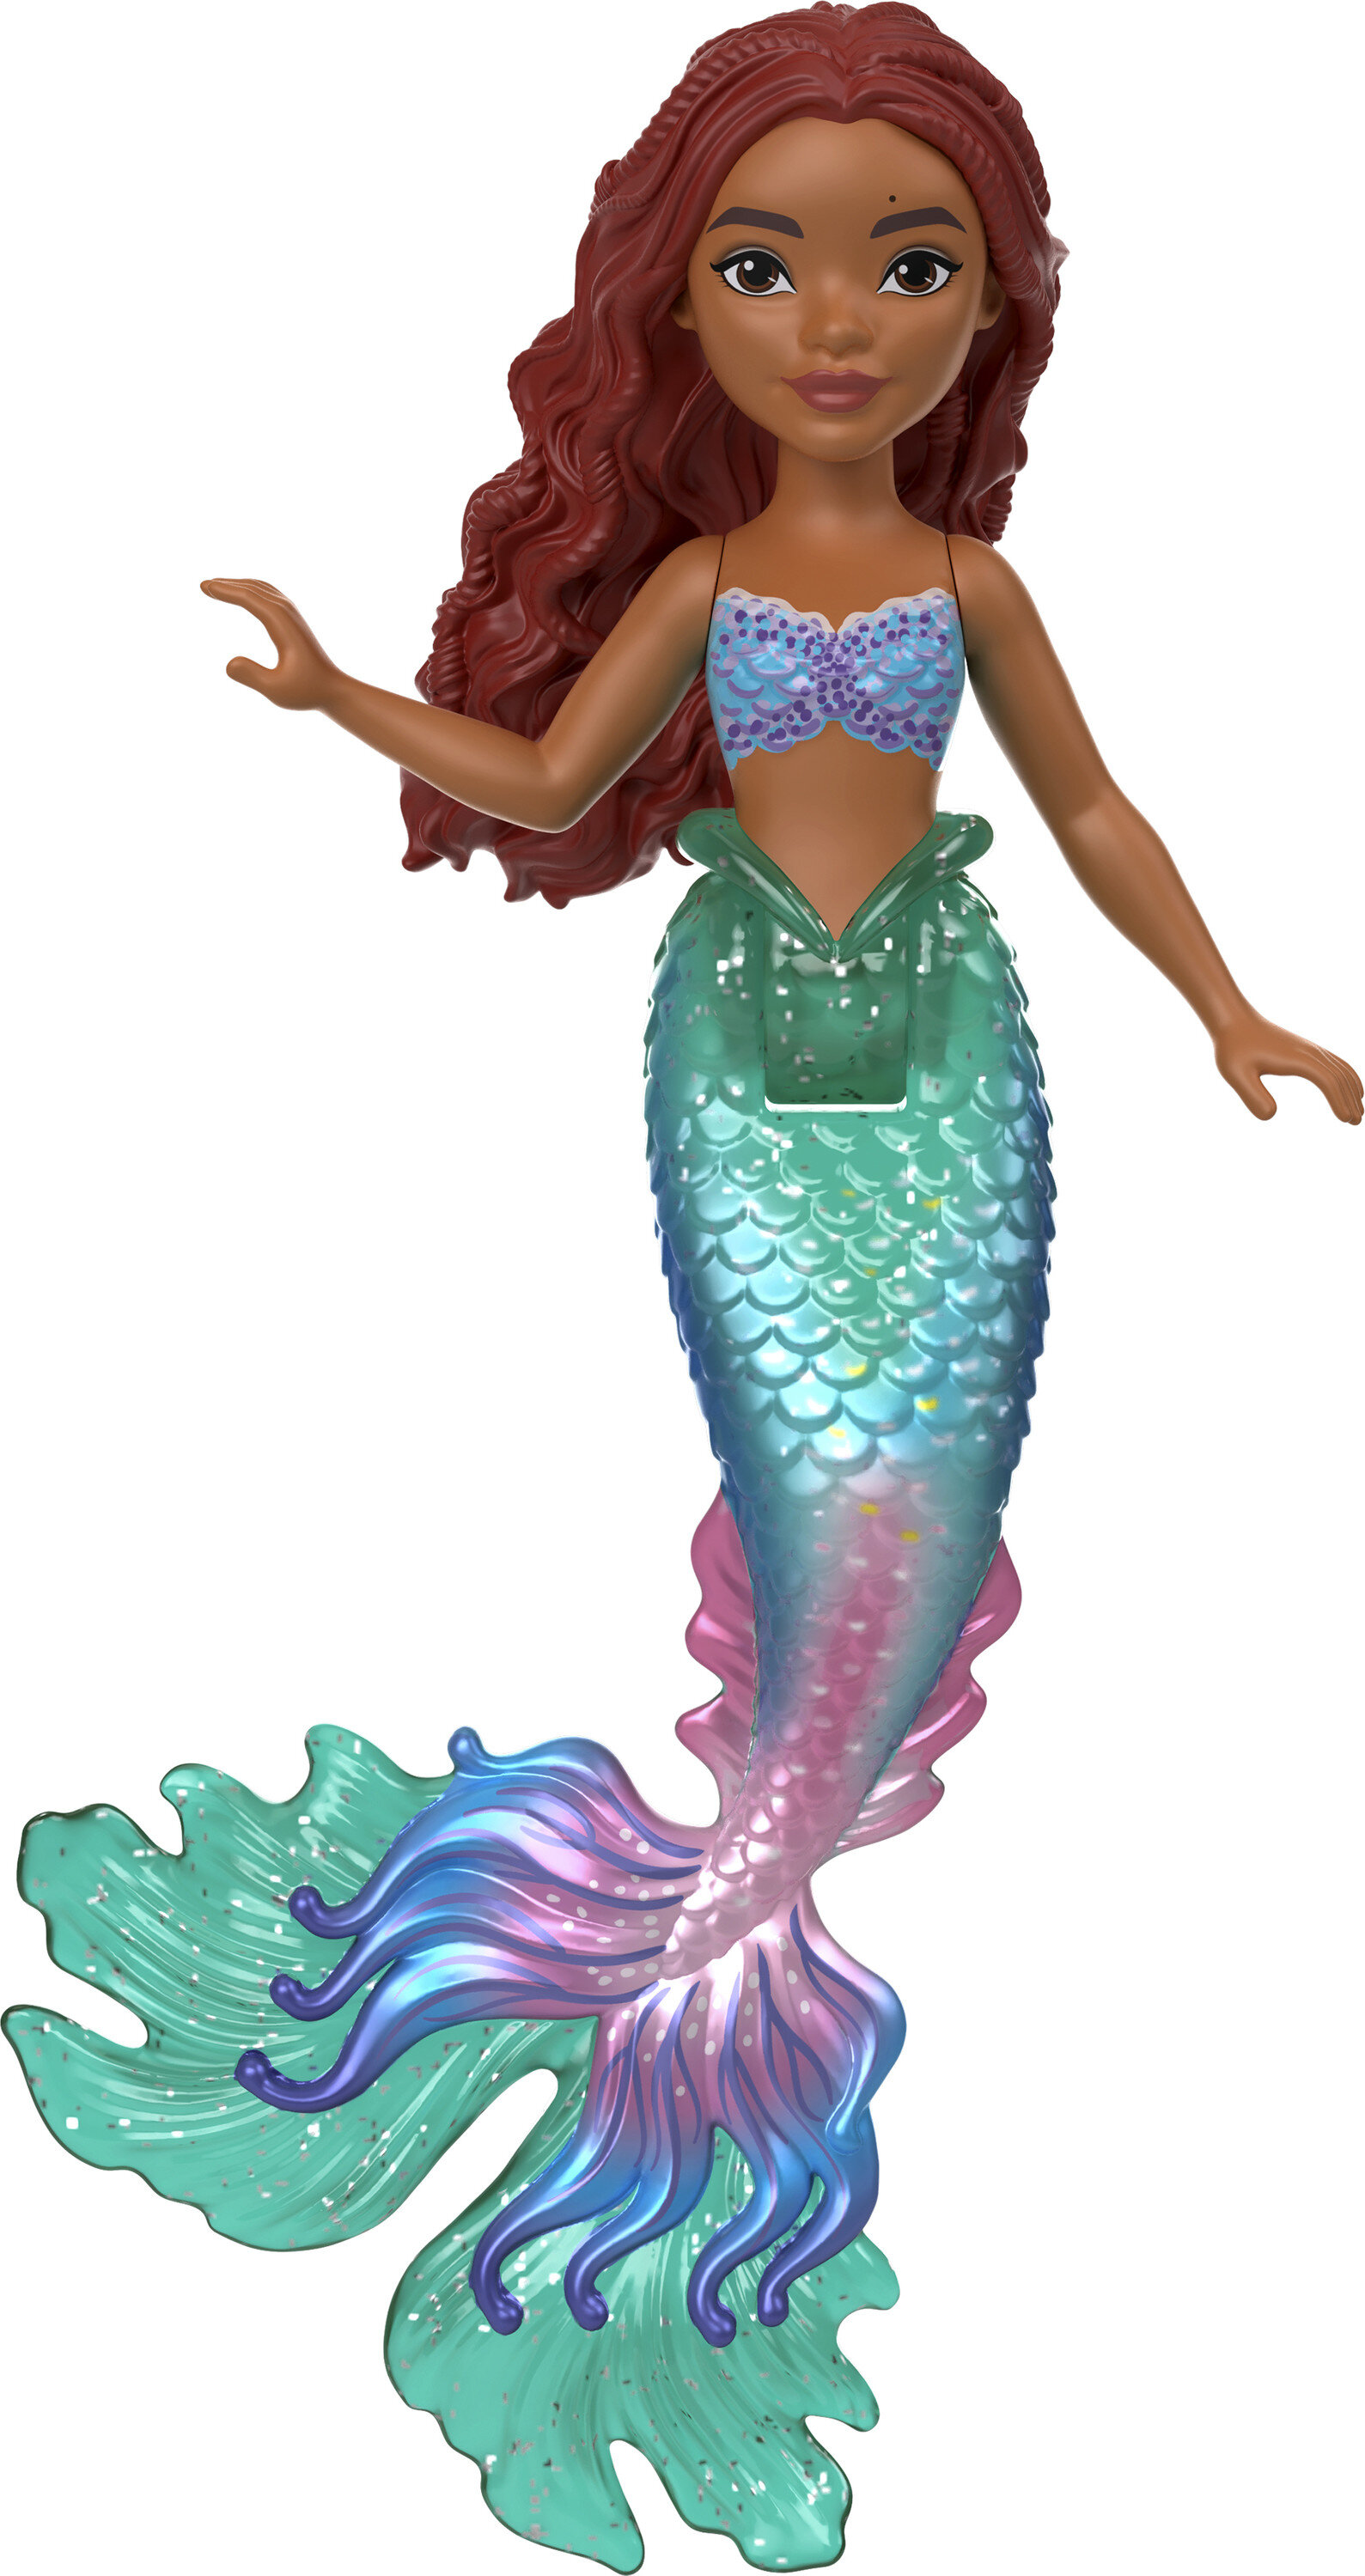 Disney The Little Mermaid Ariel Small Mermaid Doll - image 1 of 6